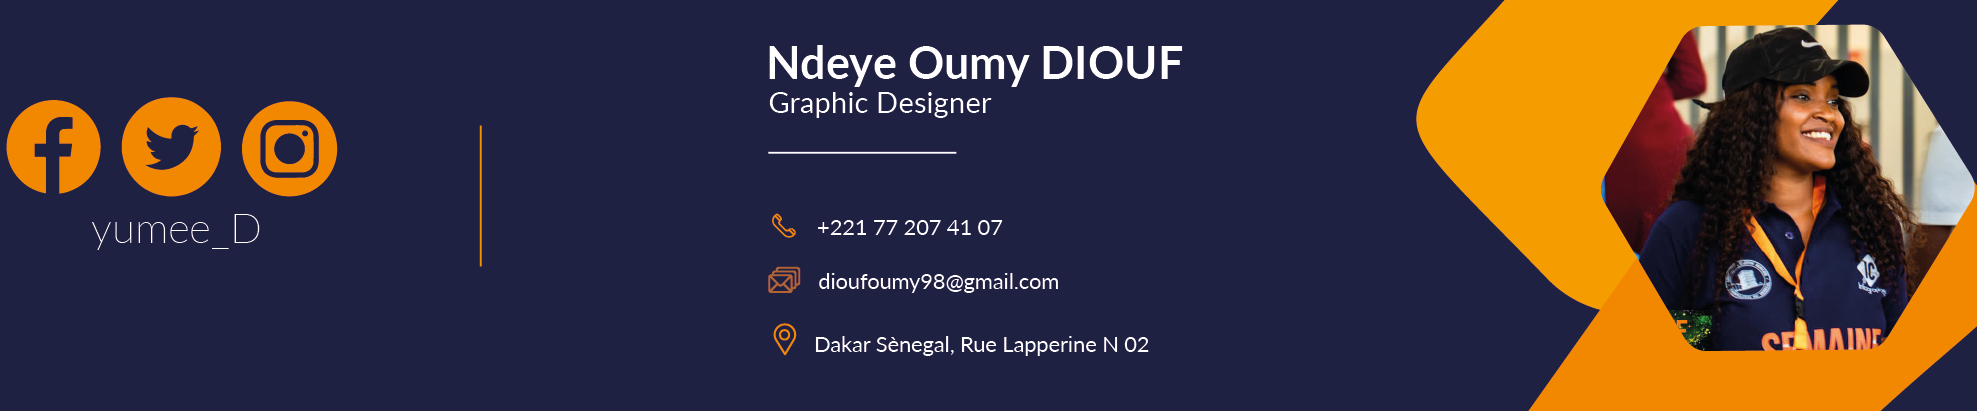 Ndeye Oumy Diouf profil başlığı